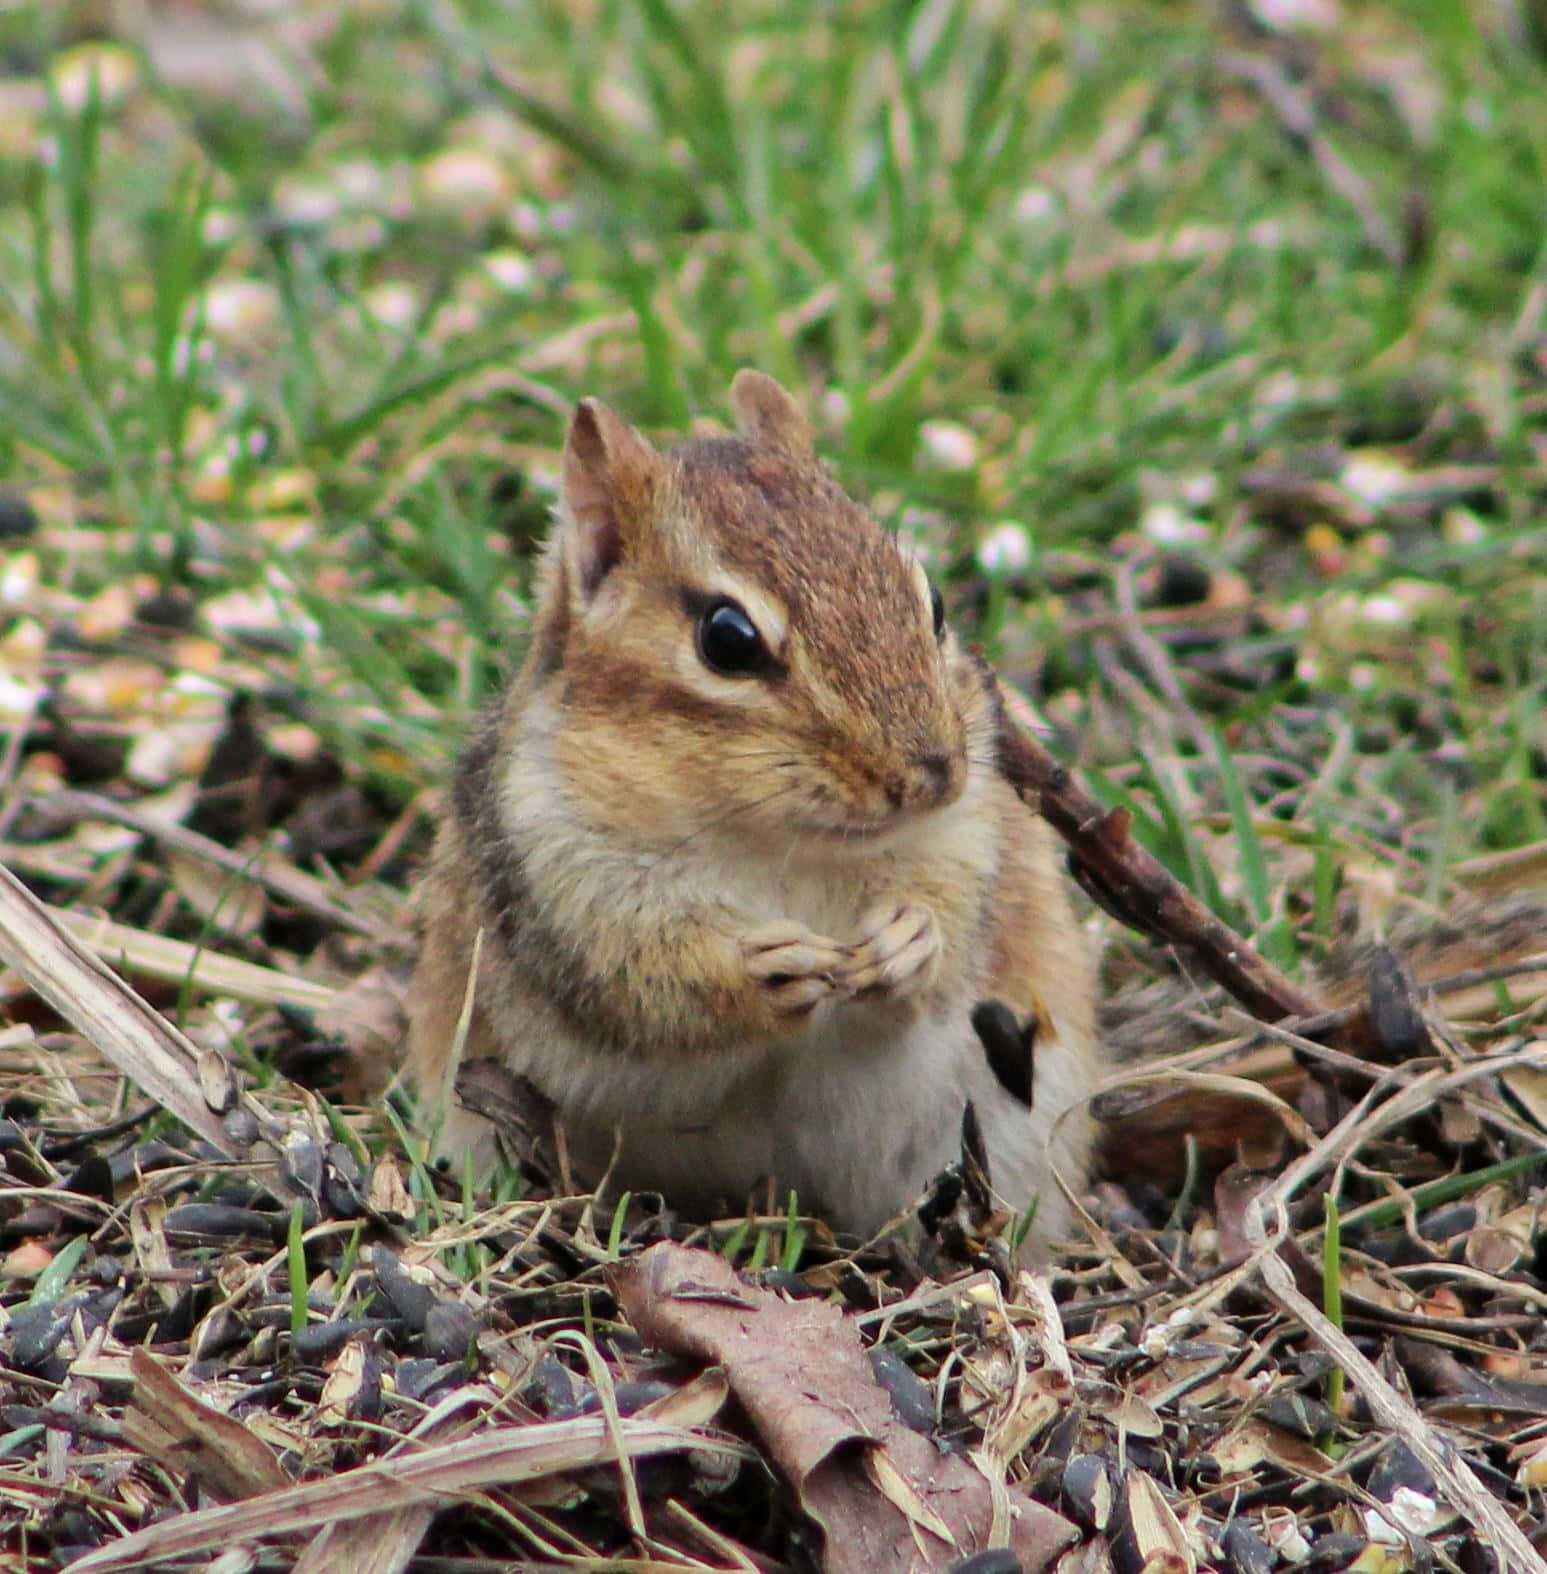 A friendly chipmunk enjoying the outdoors